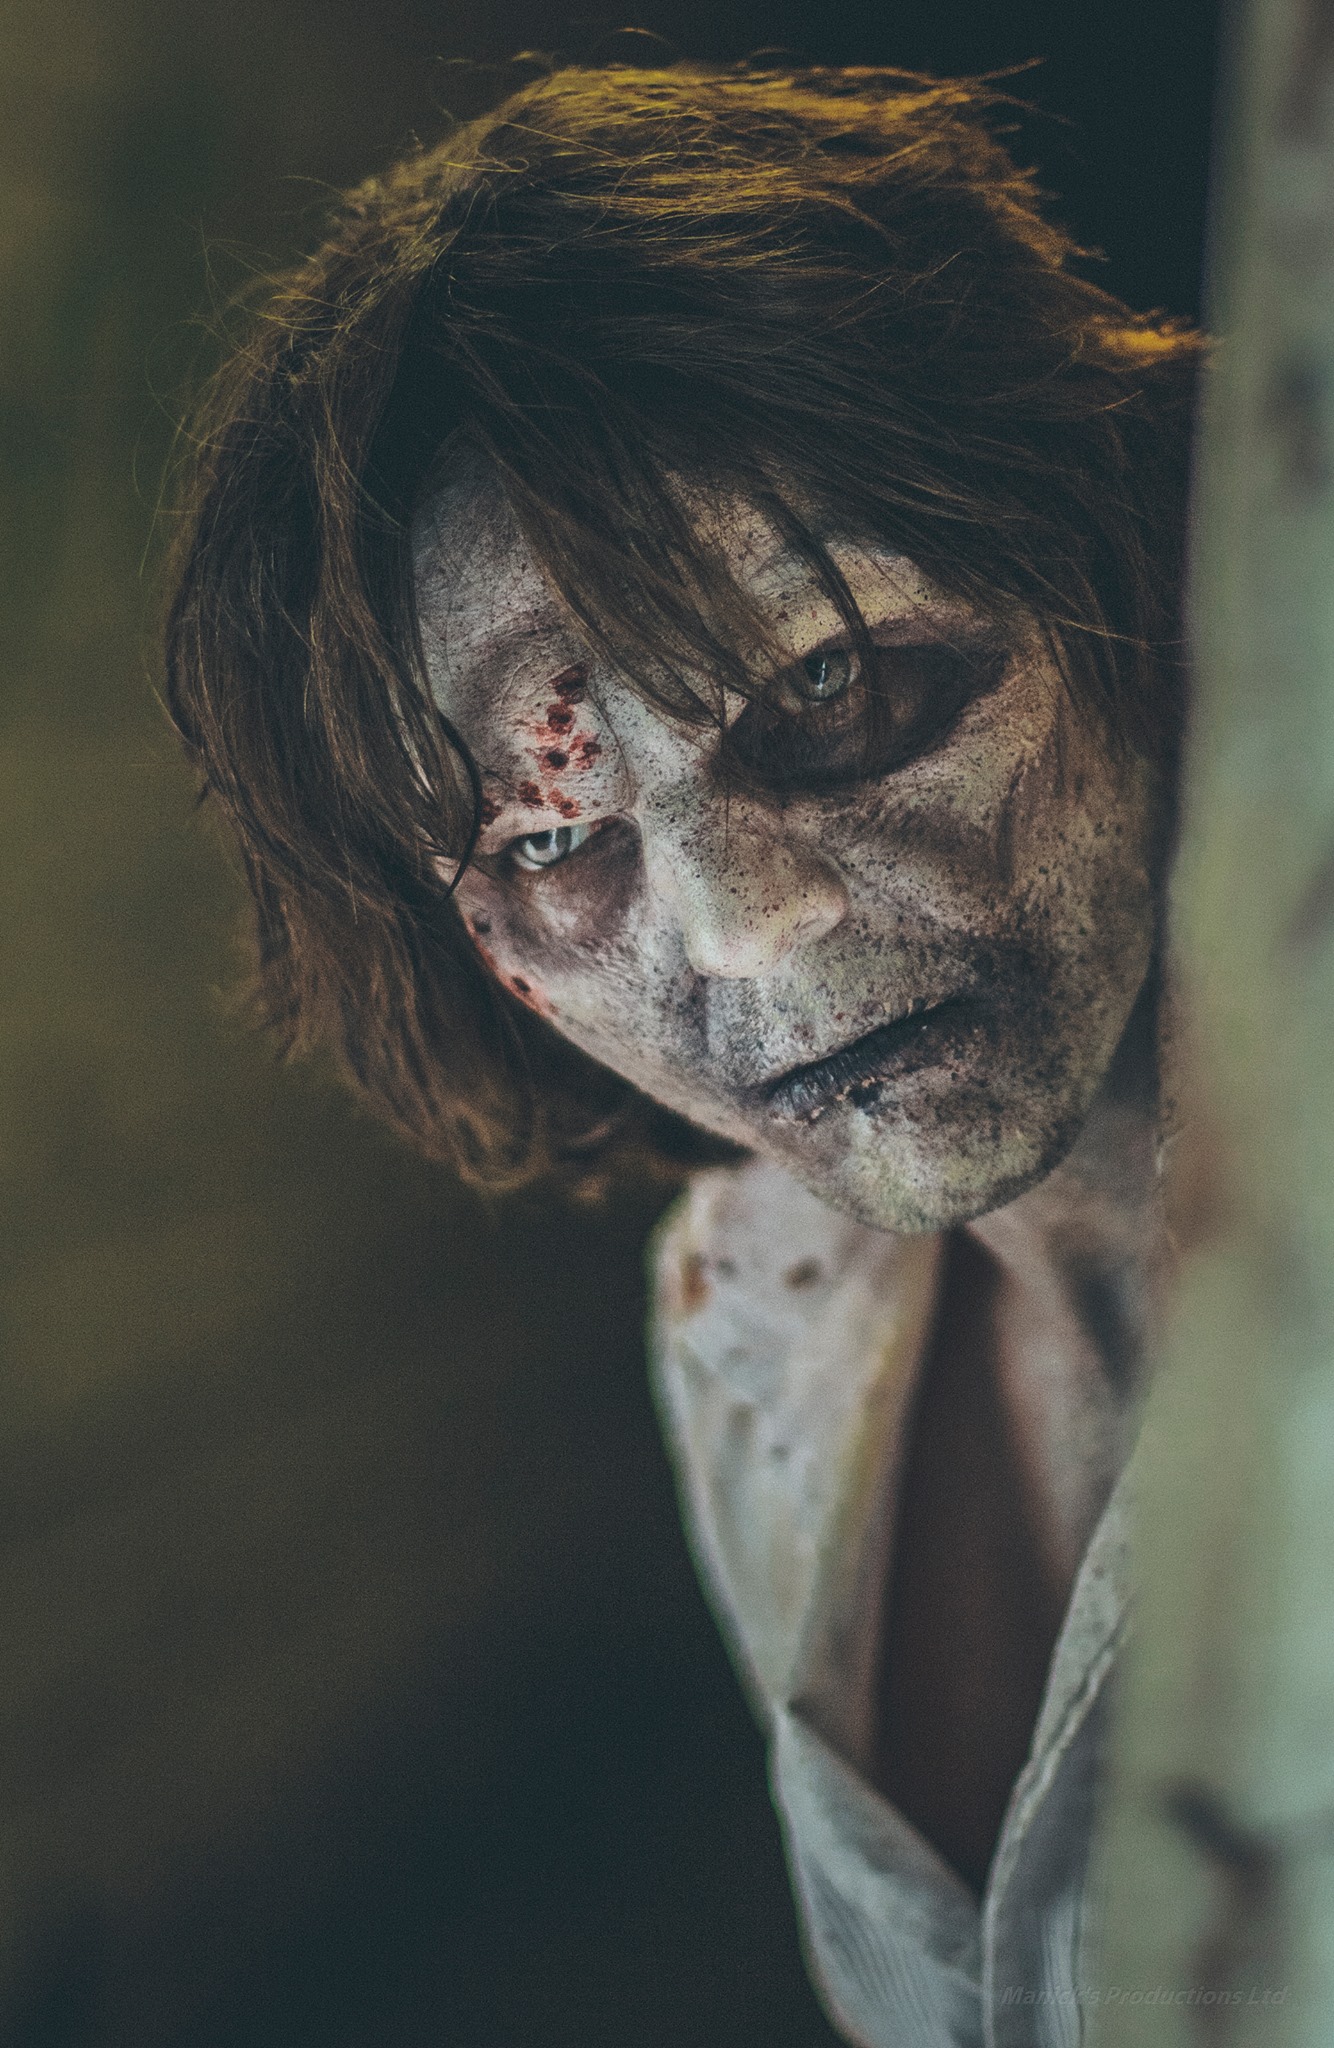 Zombie Screen Test / Photoshoot